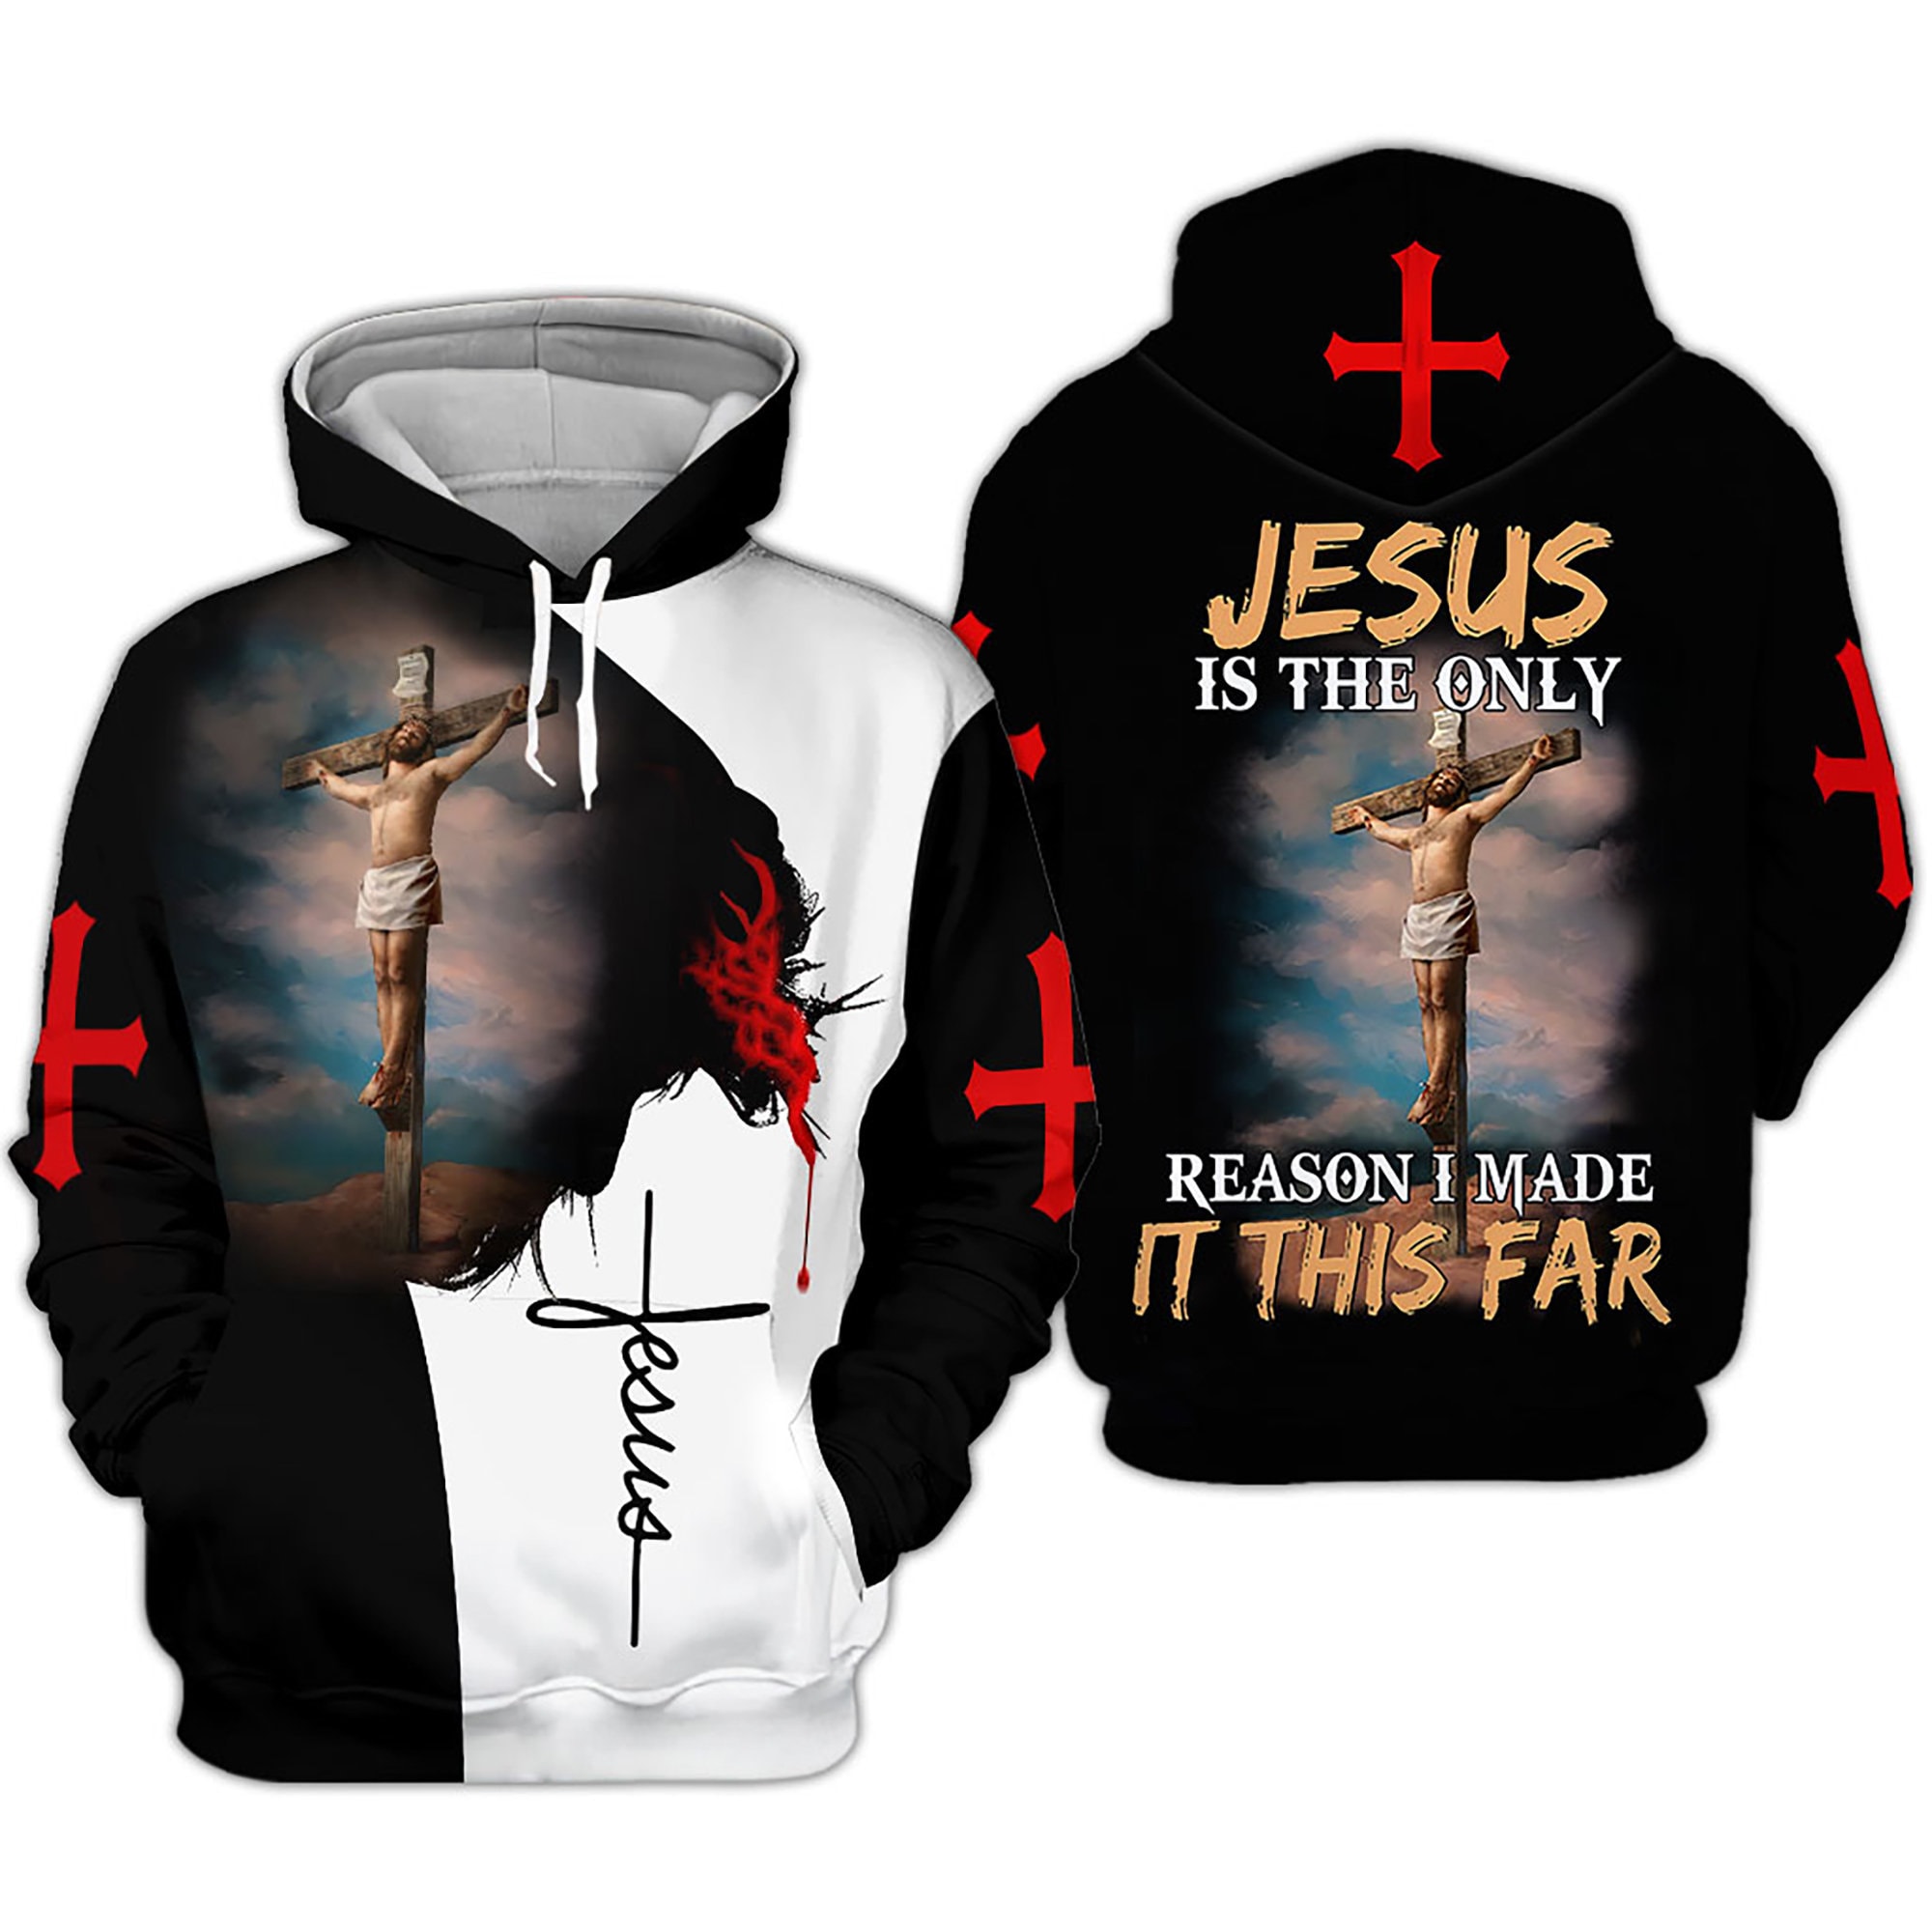 Jesus is my only season I made this far shirt, Jesus Hoodies, Jesus apparel